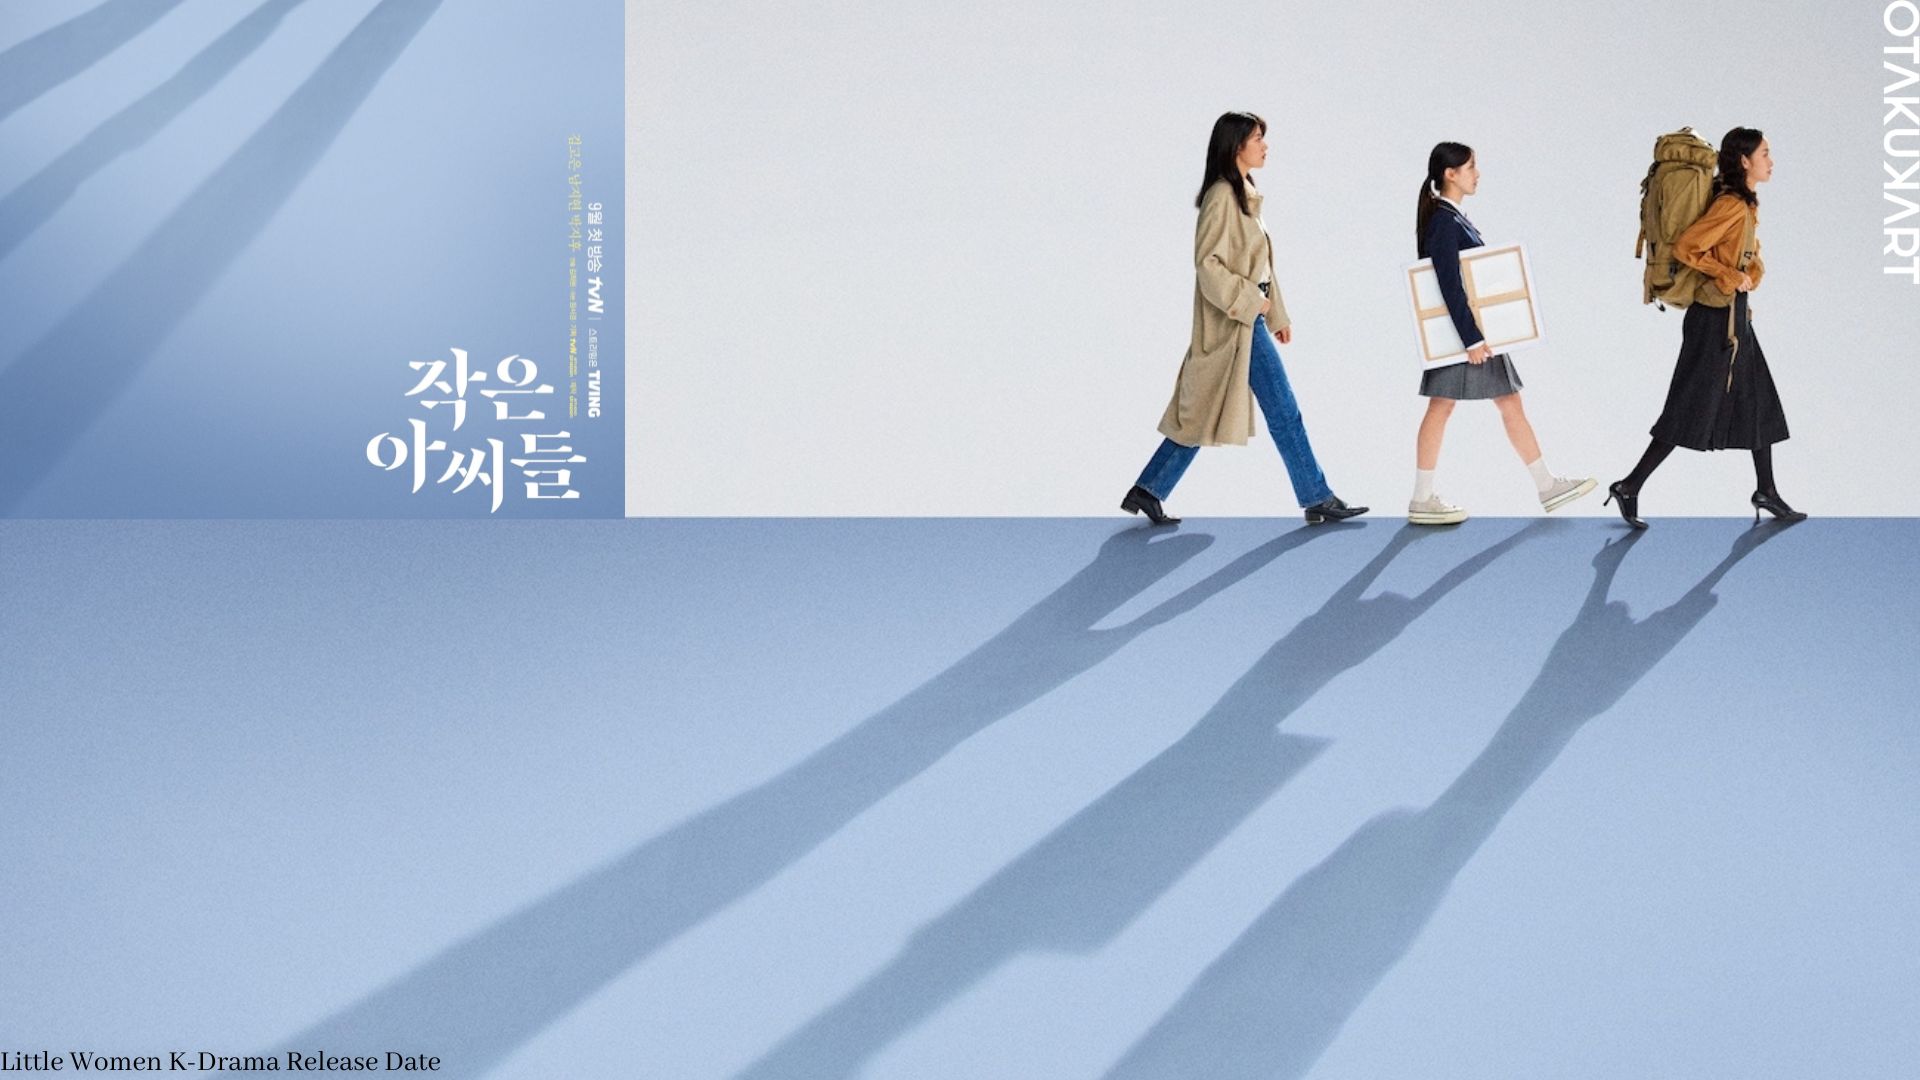 Little Women K-Drama Release Date: All the Details!